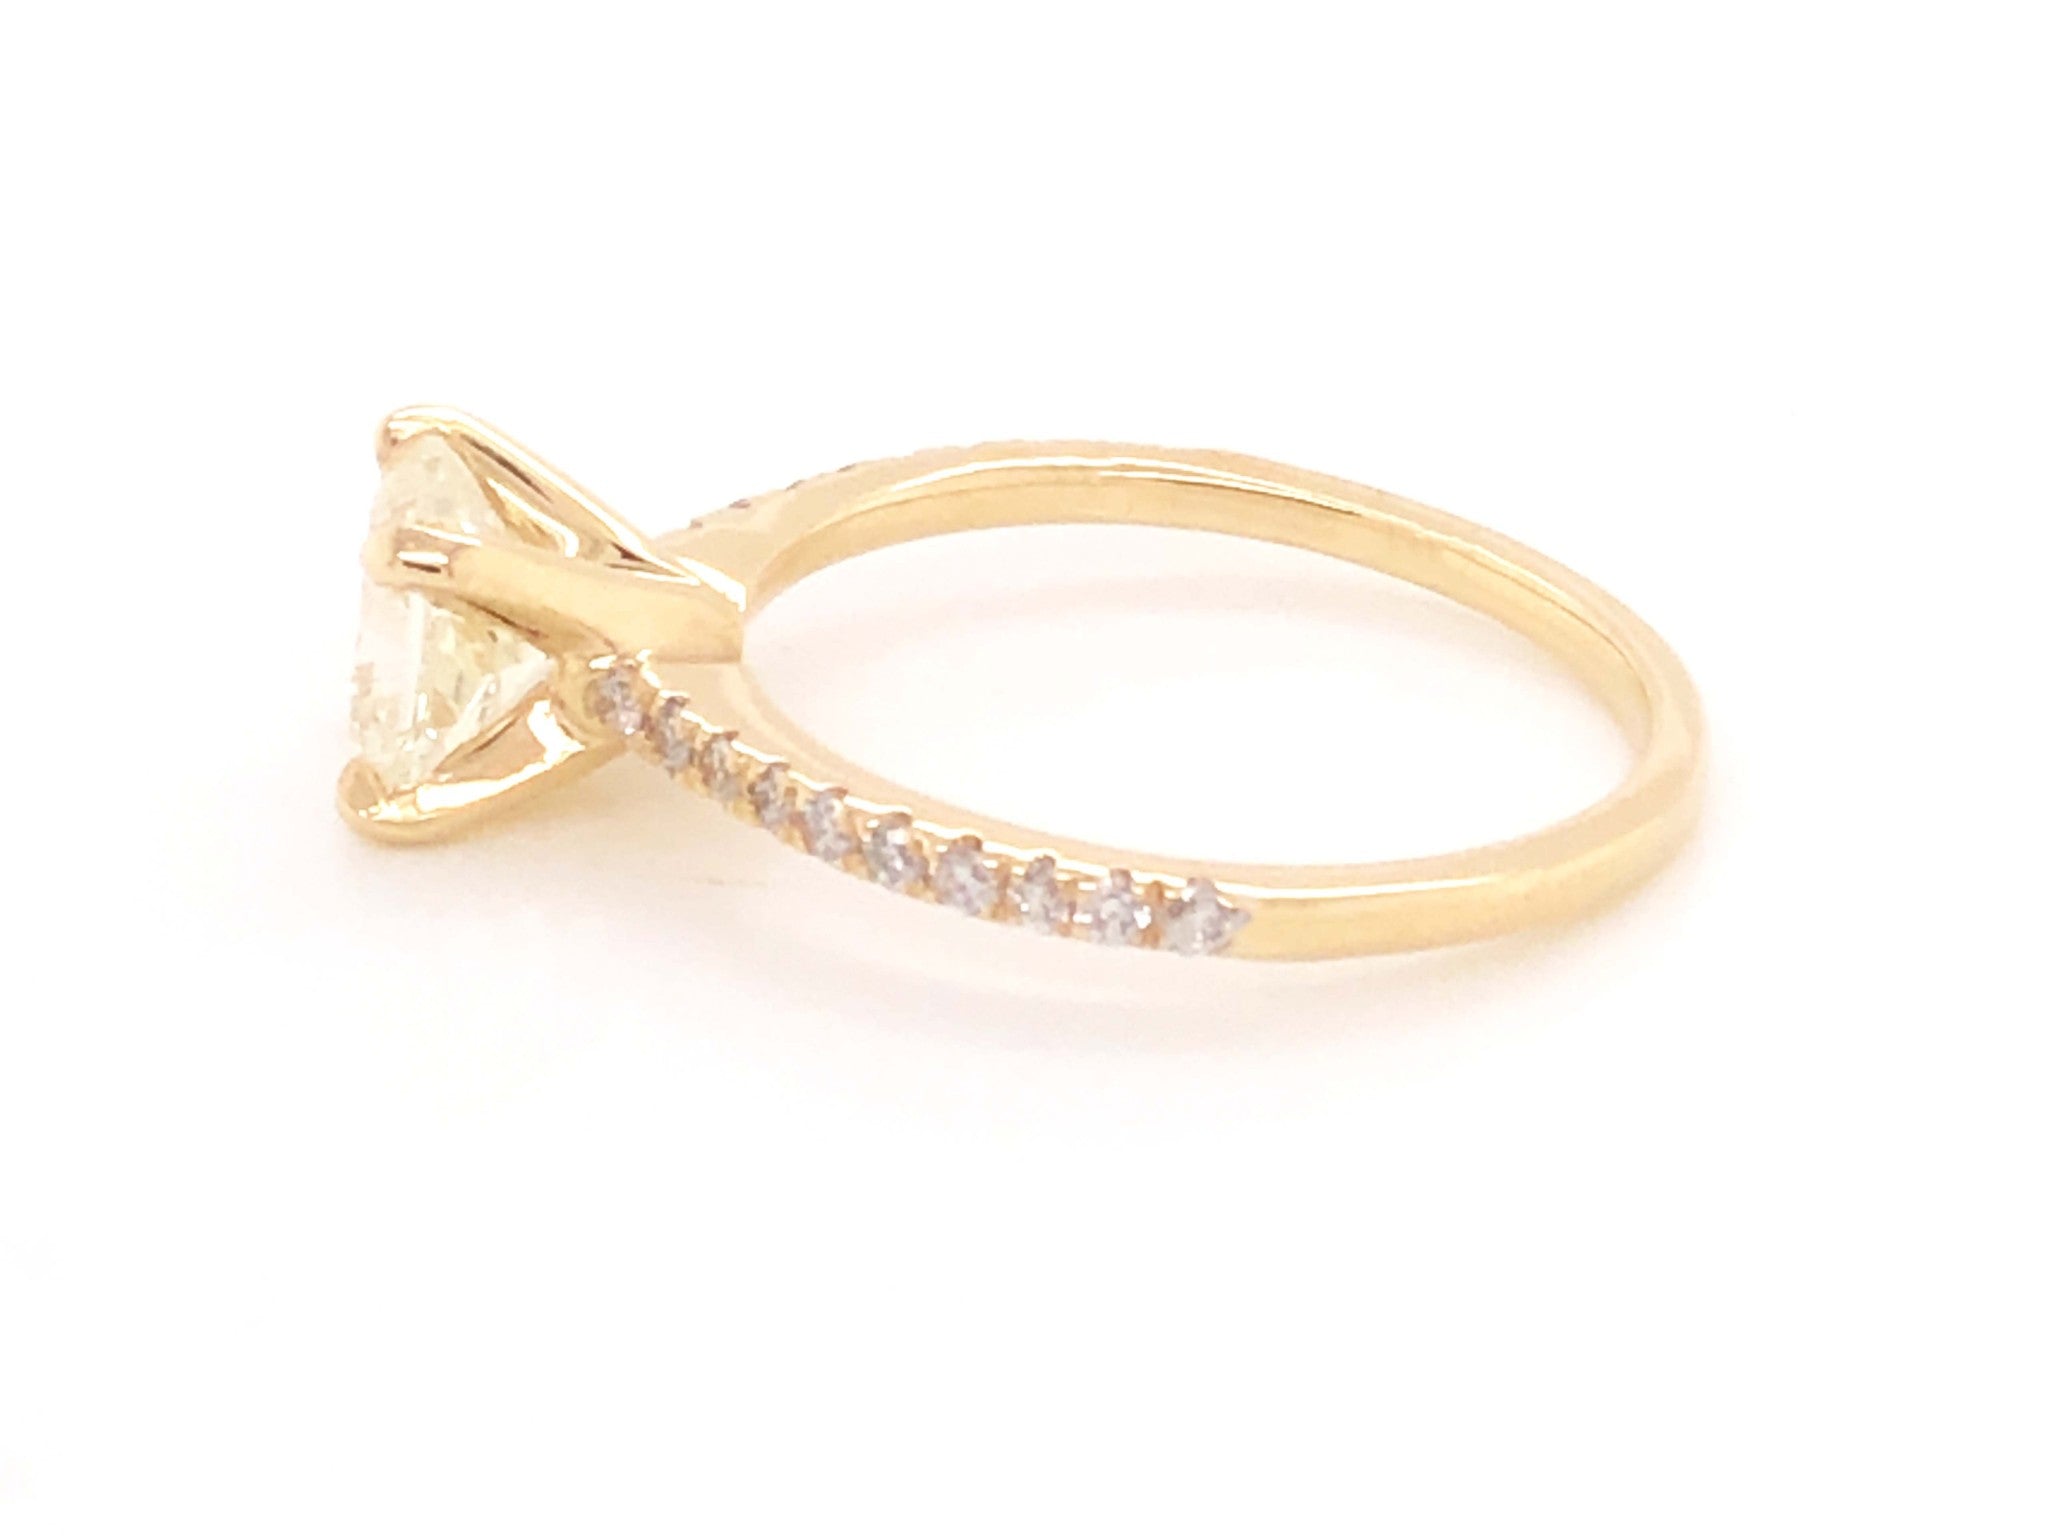 Radiant Cut 1.23 Carat Center Stone Diamond Engagement Ring - 14k Yellow Gold